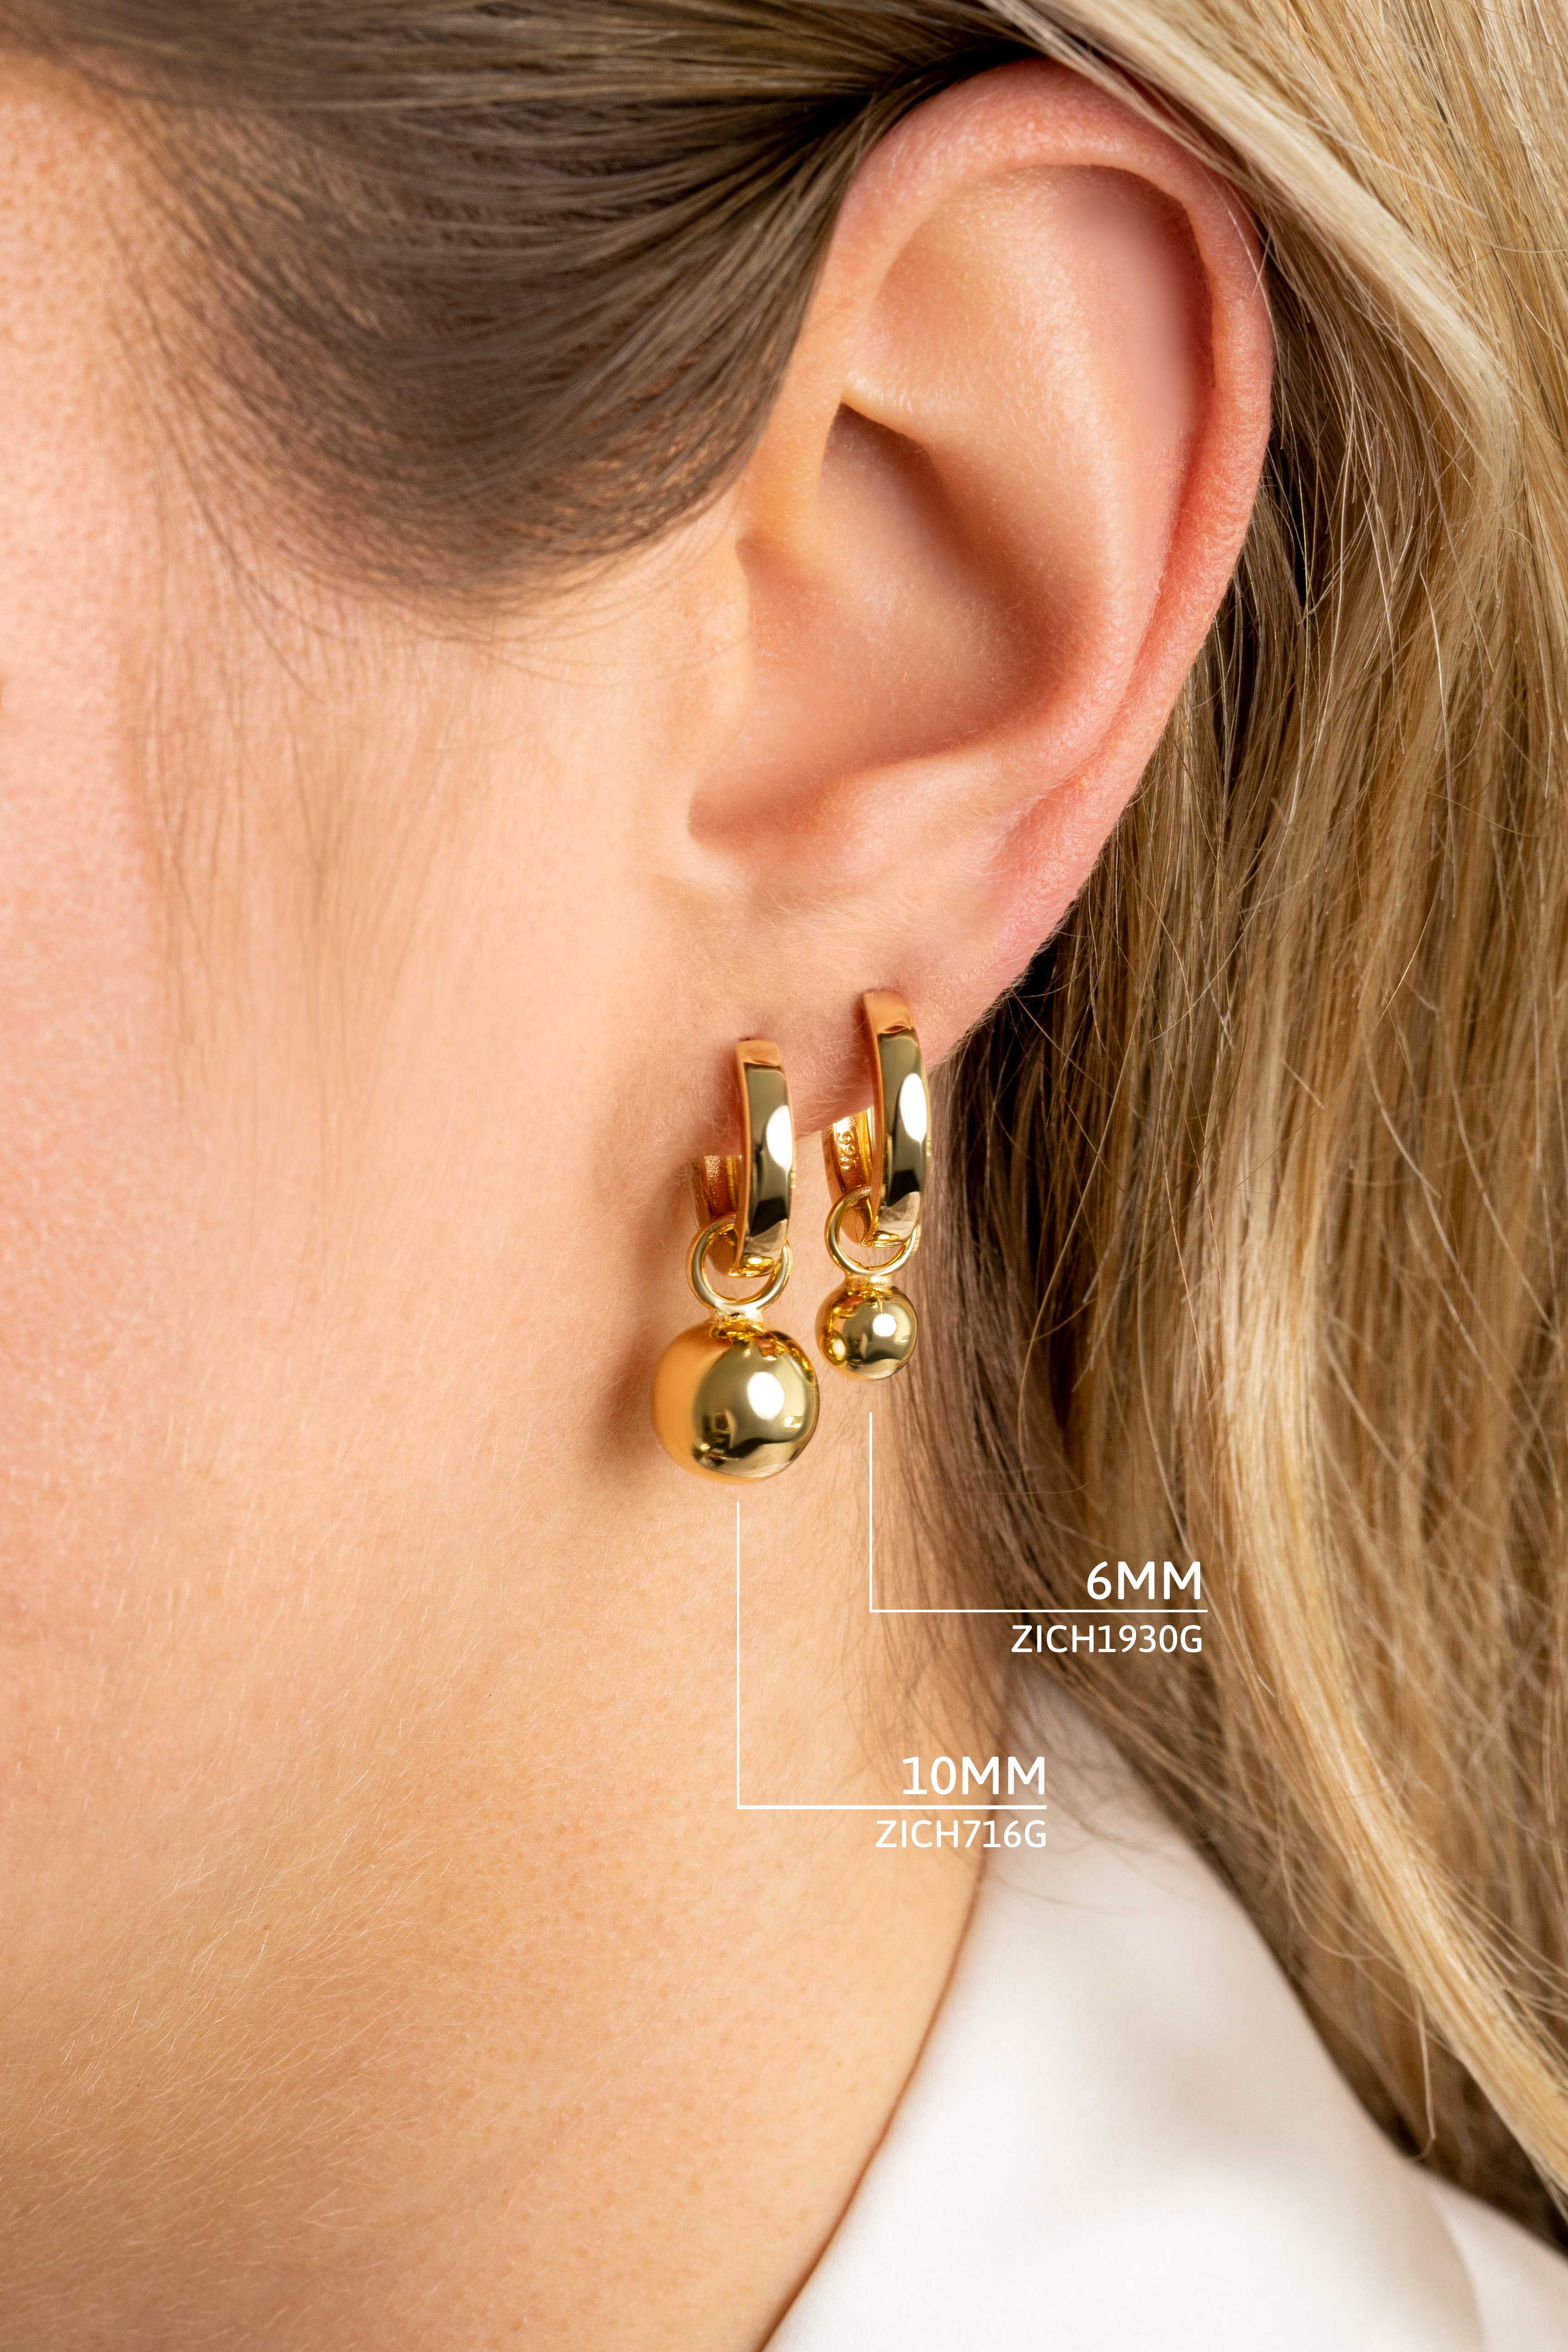 6mm ZINZI Gold Plated Sterling Silver Earrings Pendants Beads ZICH1930G (excl. hoop earrings)